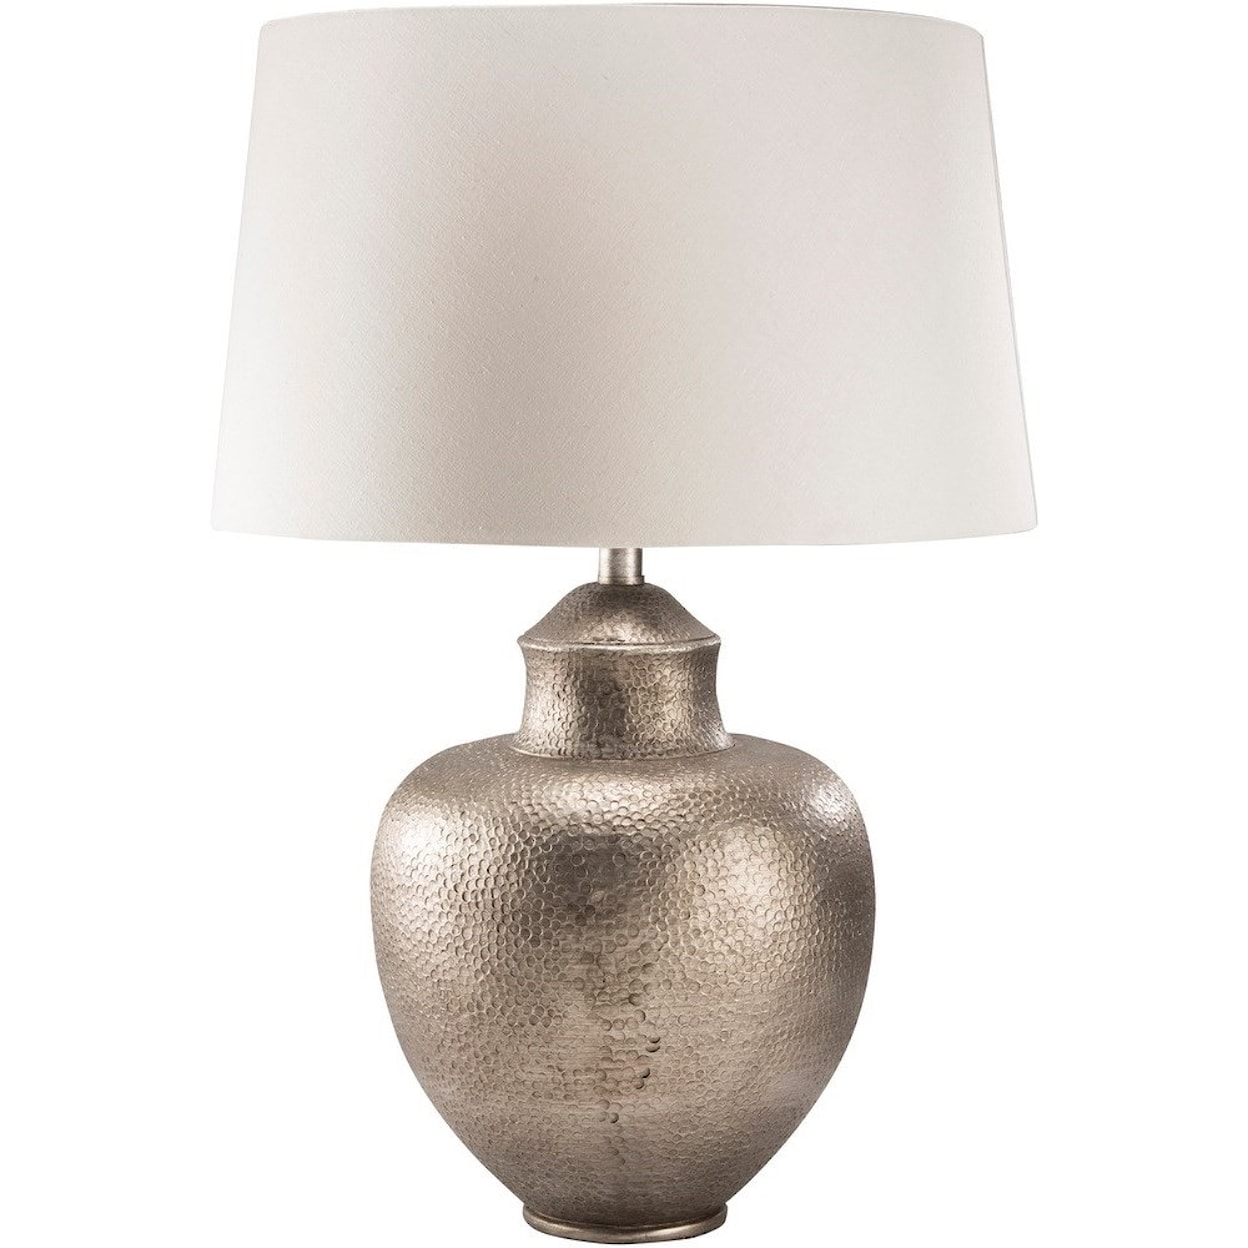 Surya Cooper Antiqued Silvertone Global Table Lamp